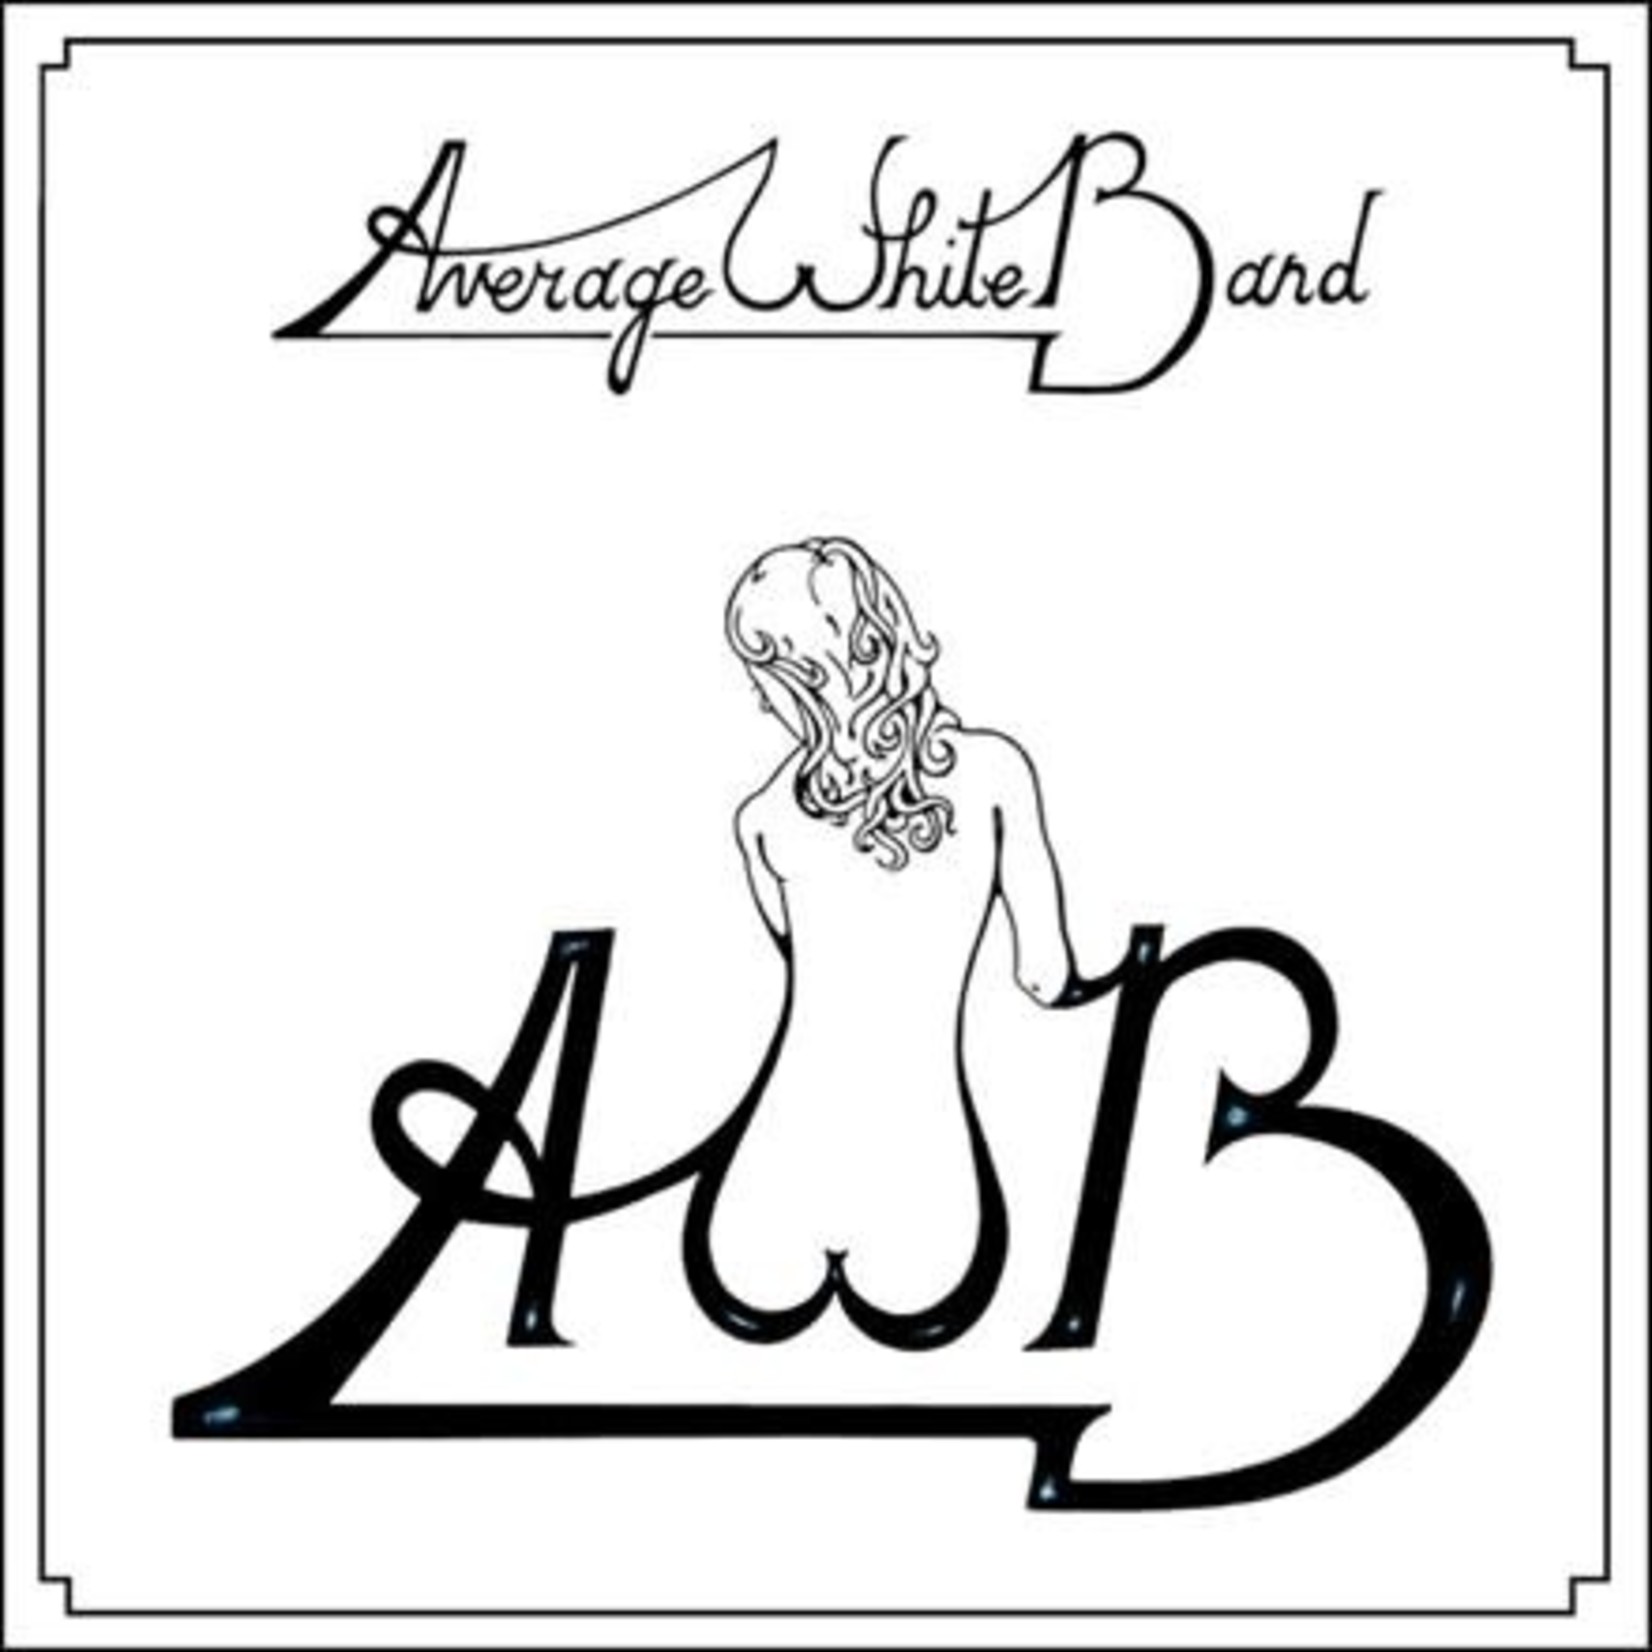 [New] Average White Band - AWB (180g)